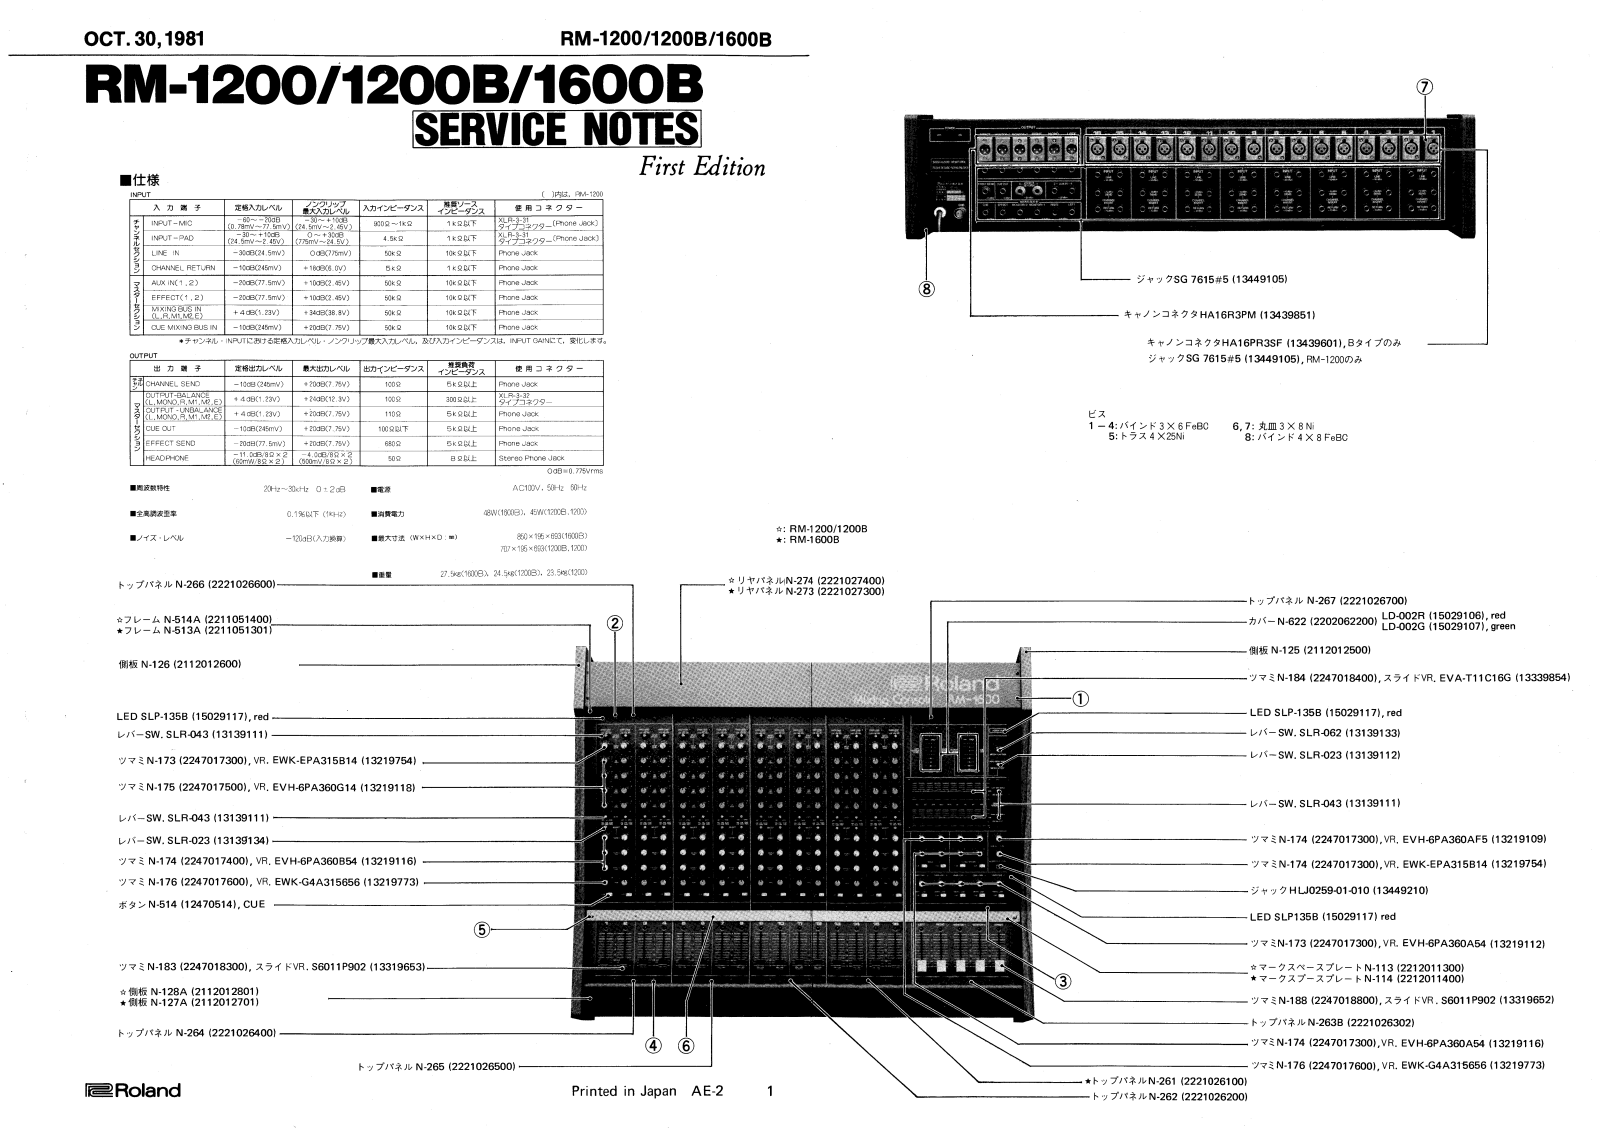 Roland RM-1200, RM-1200B, RM-1600B Service Manual